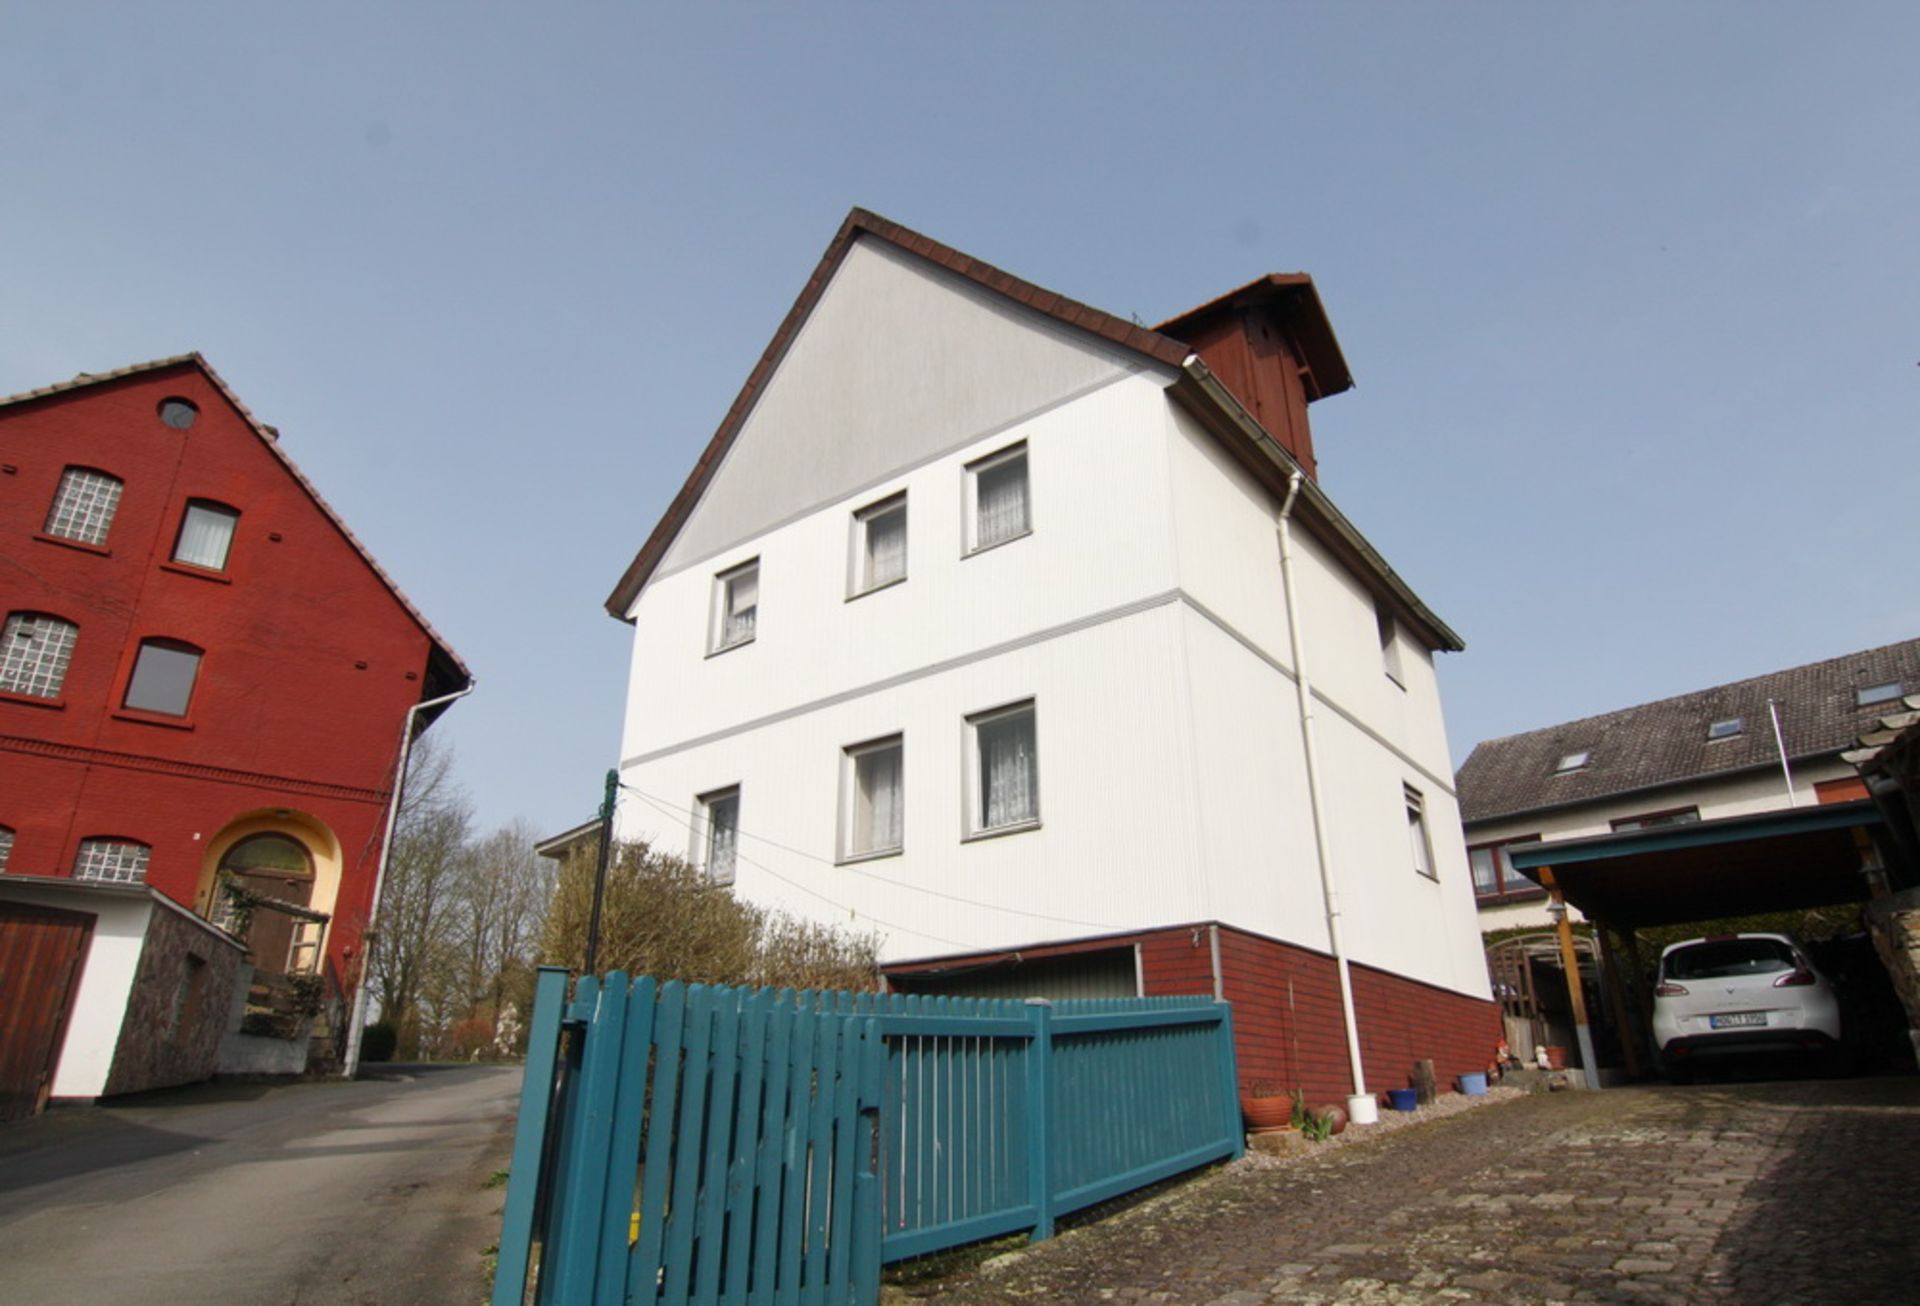 Hessen reg. Germany - Two Storey home + attic & garage - Image 4 of 62